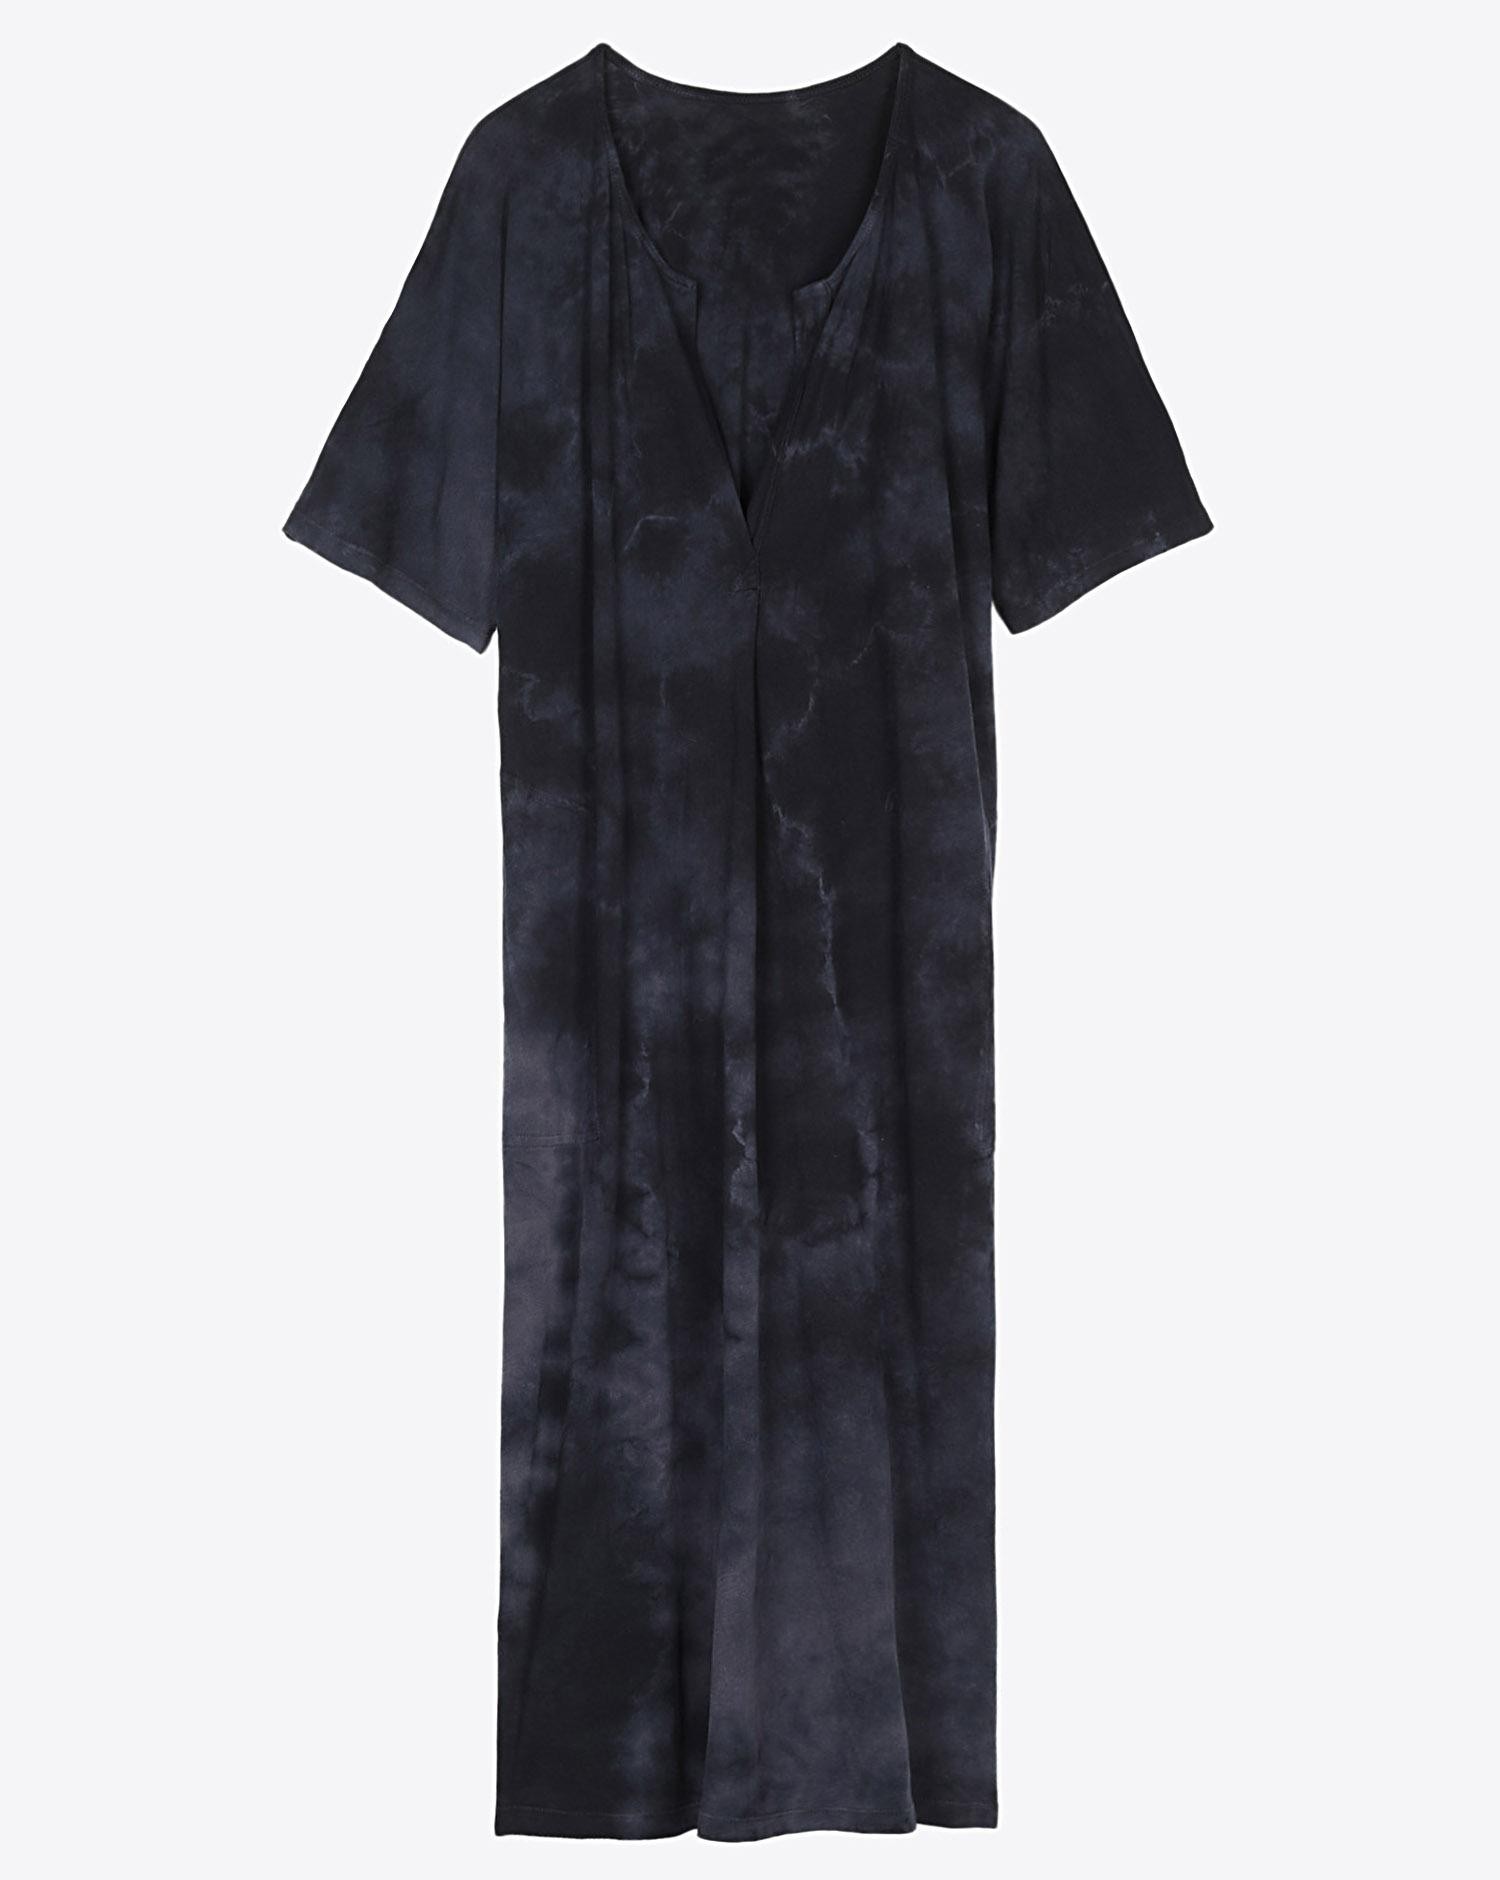 Raquel Allegra Pré-Collection Henley Dress - Black Tie Dye  